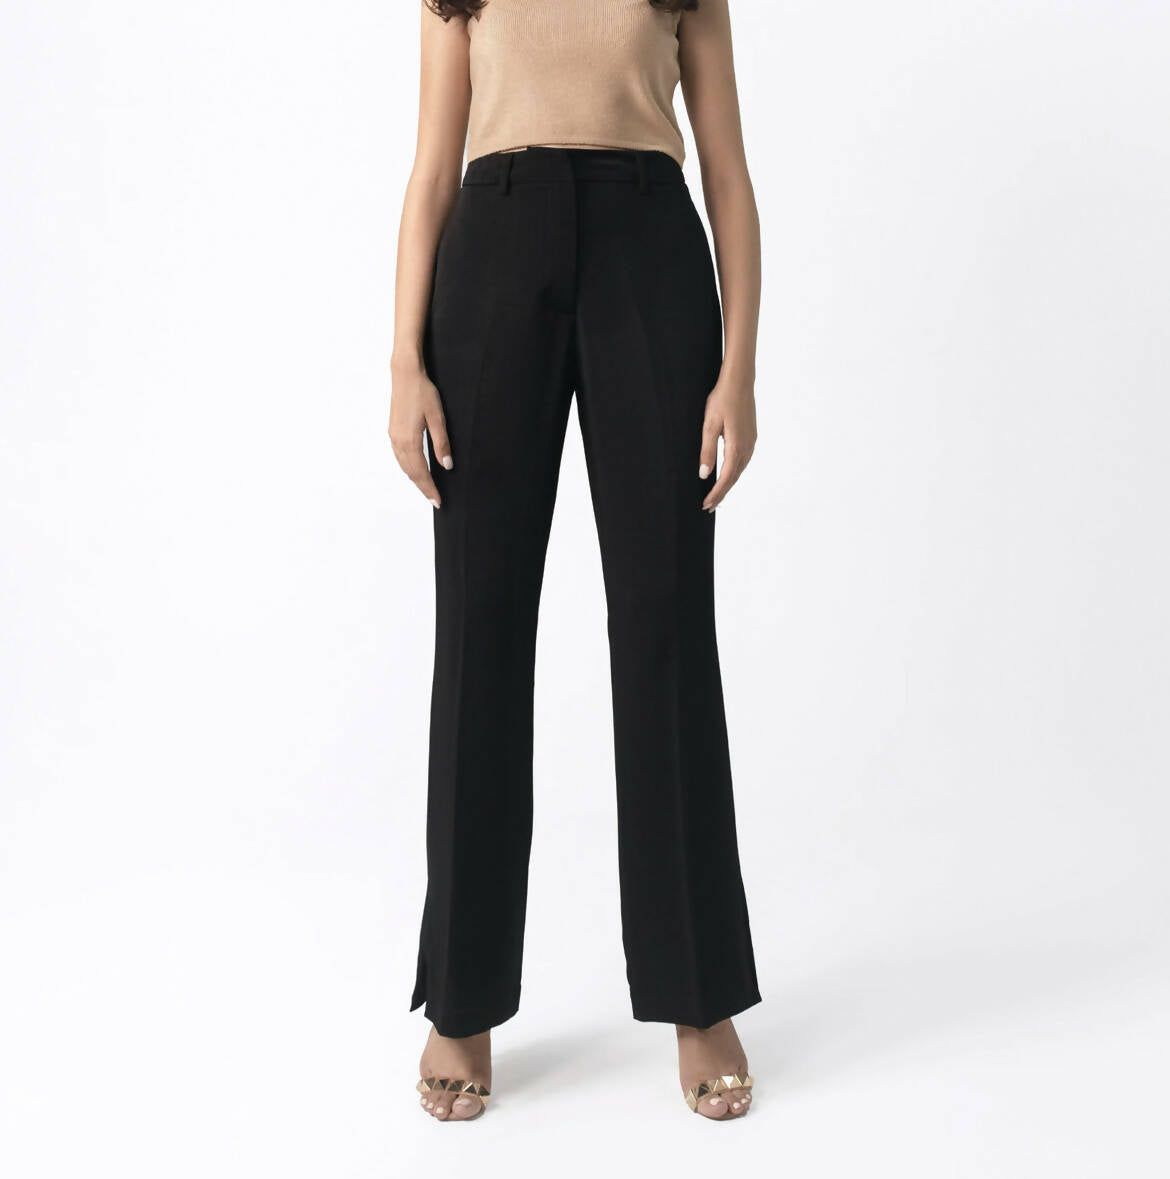 Raiment61 | Black Flared Side Slit Pants (Size: M )|Women Bottom & Pants | New